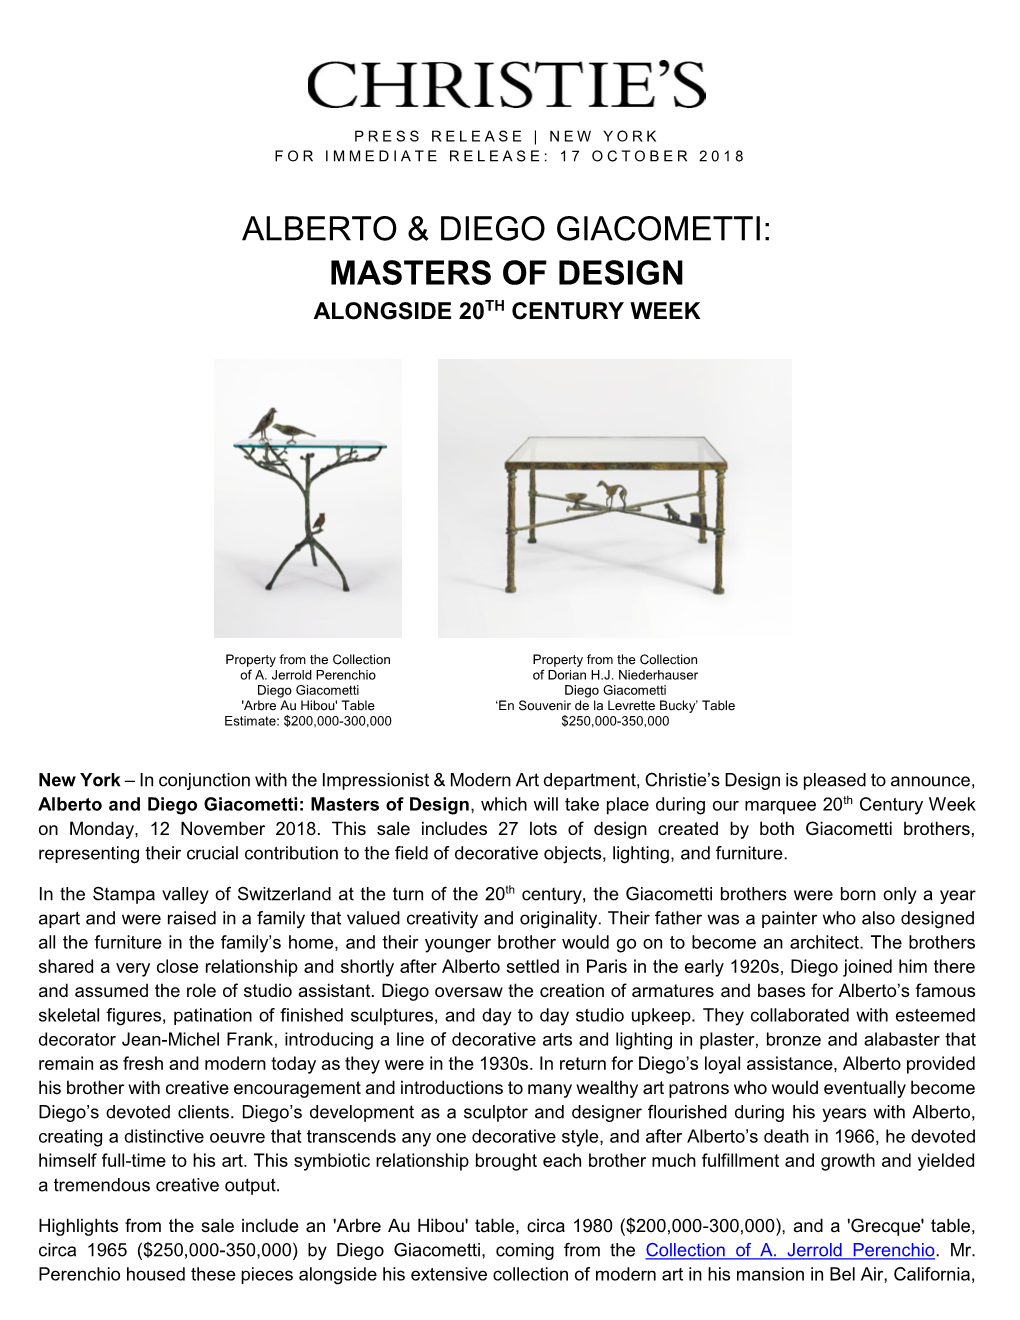 Alberto & Diego Giacometti